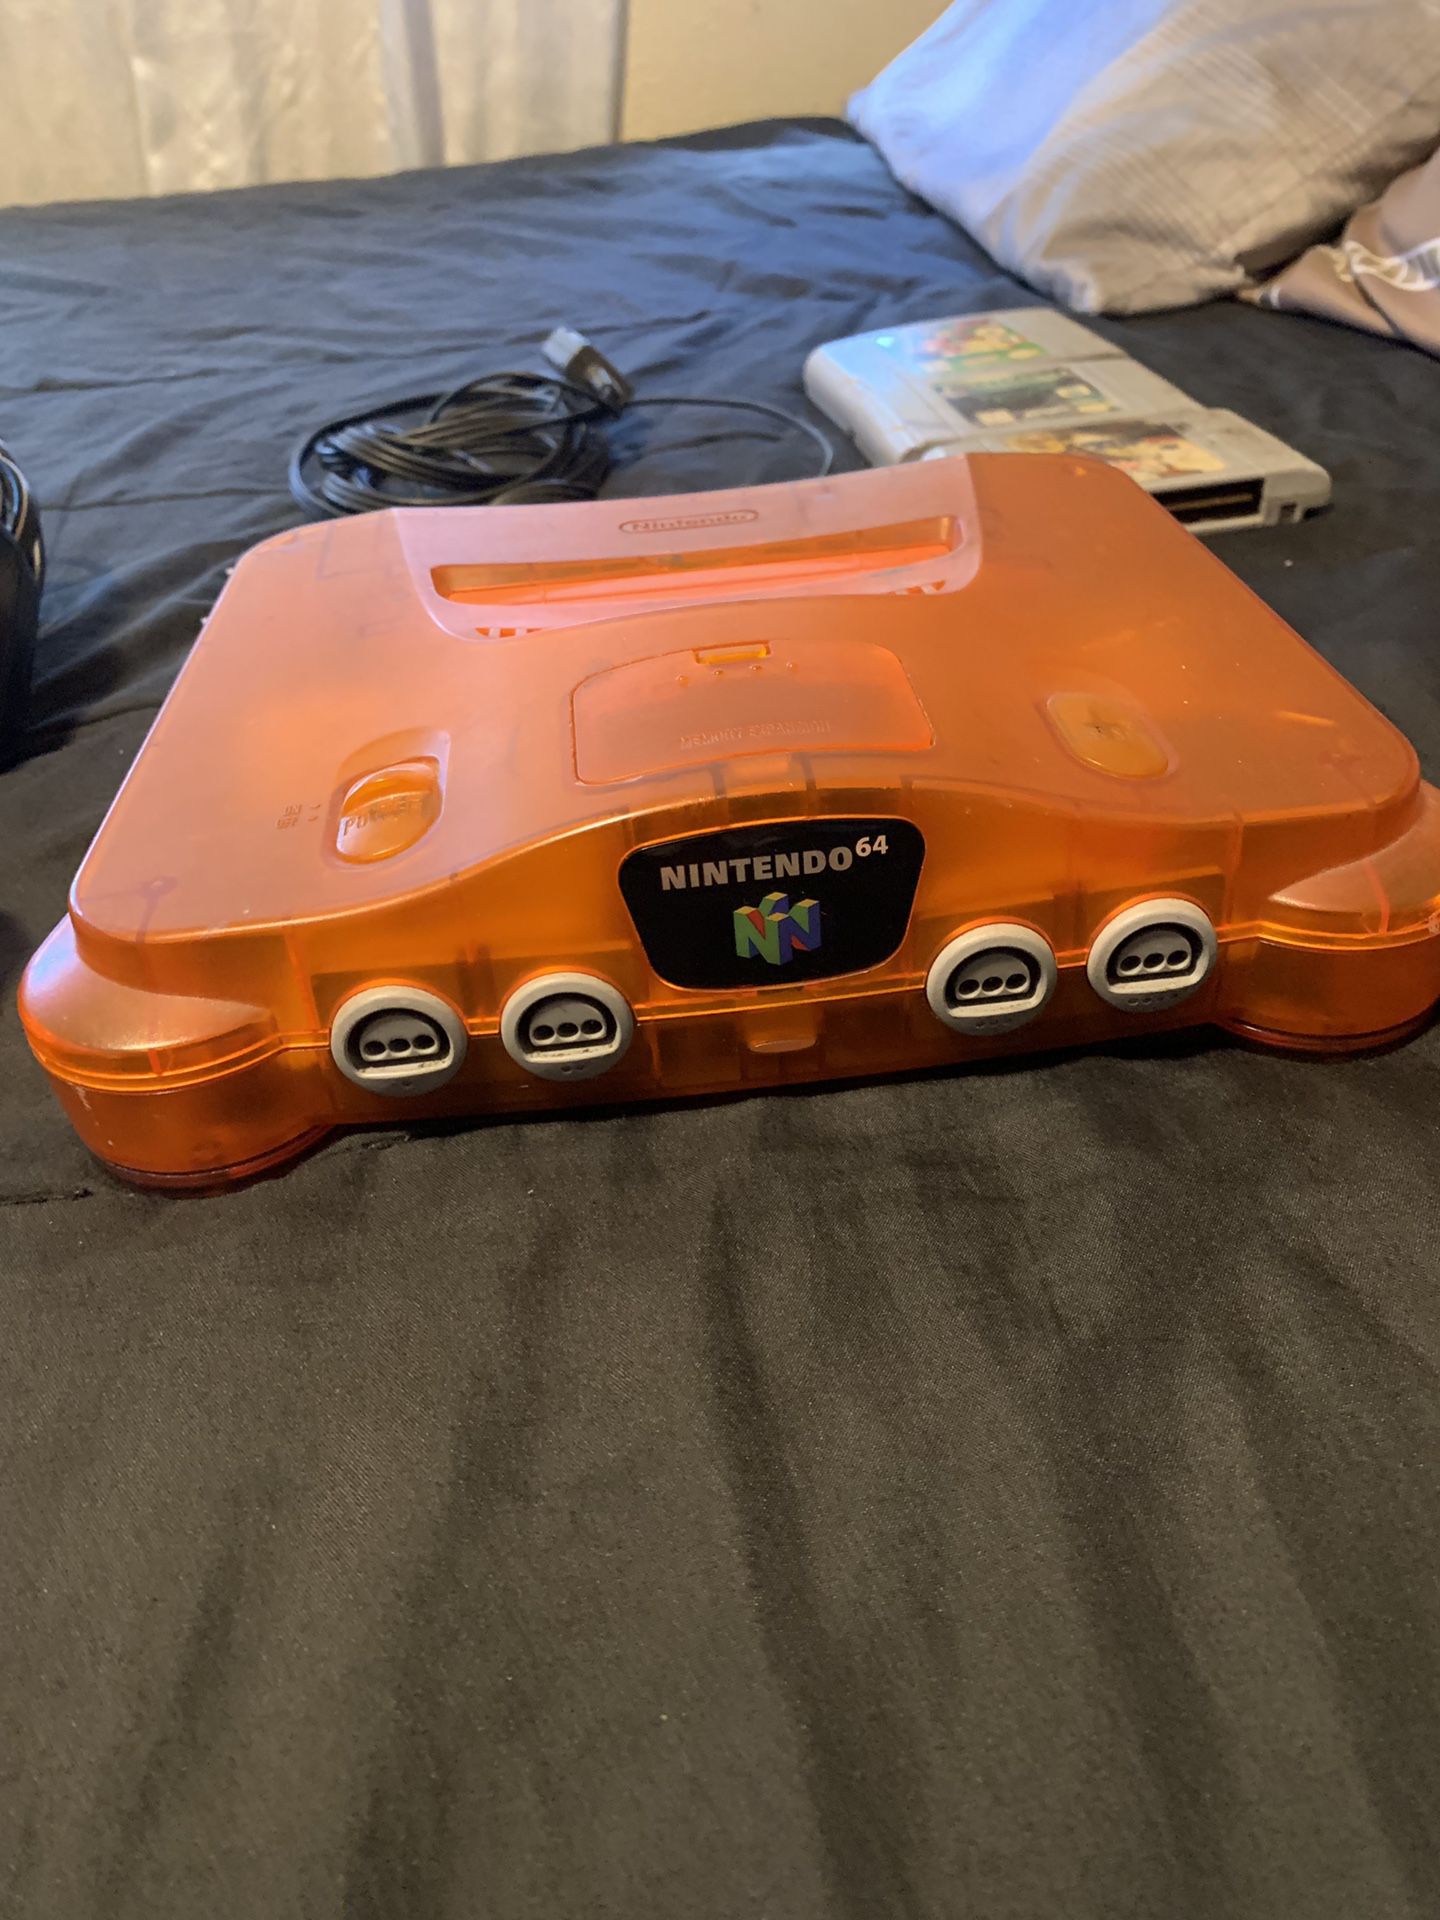 Nintendo 64 Fire Orange